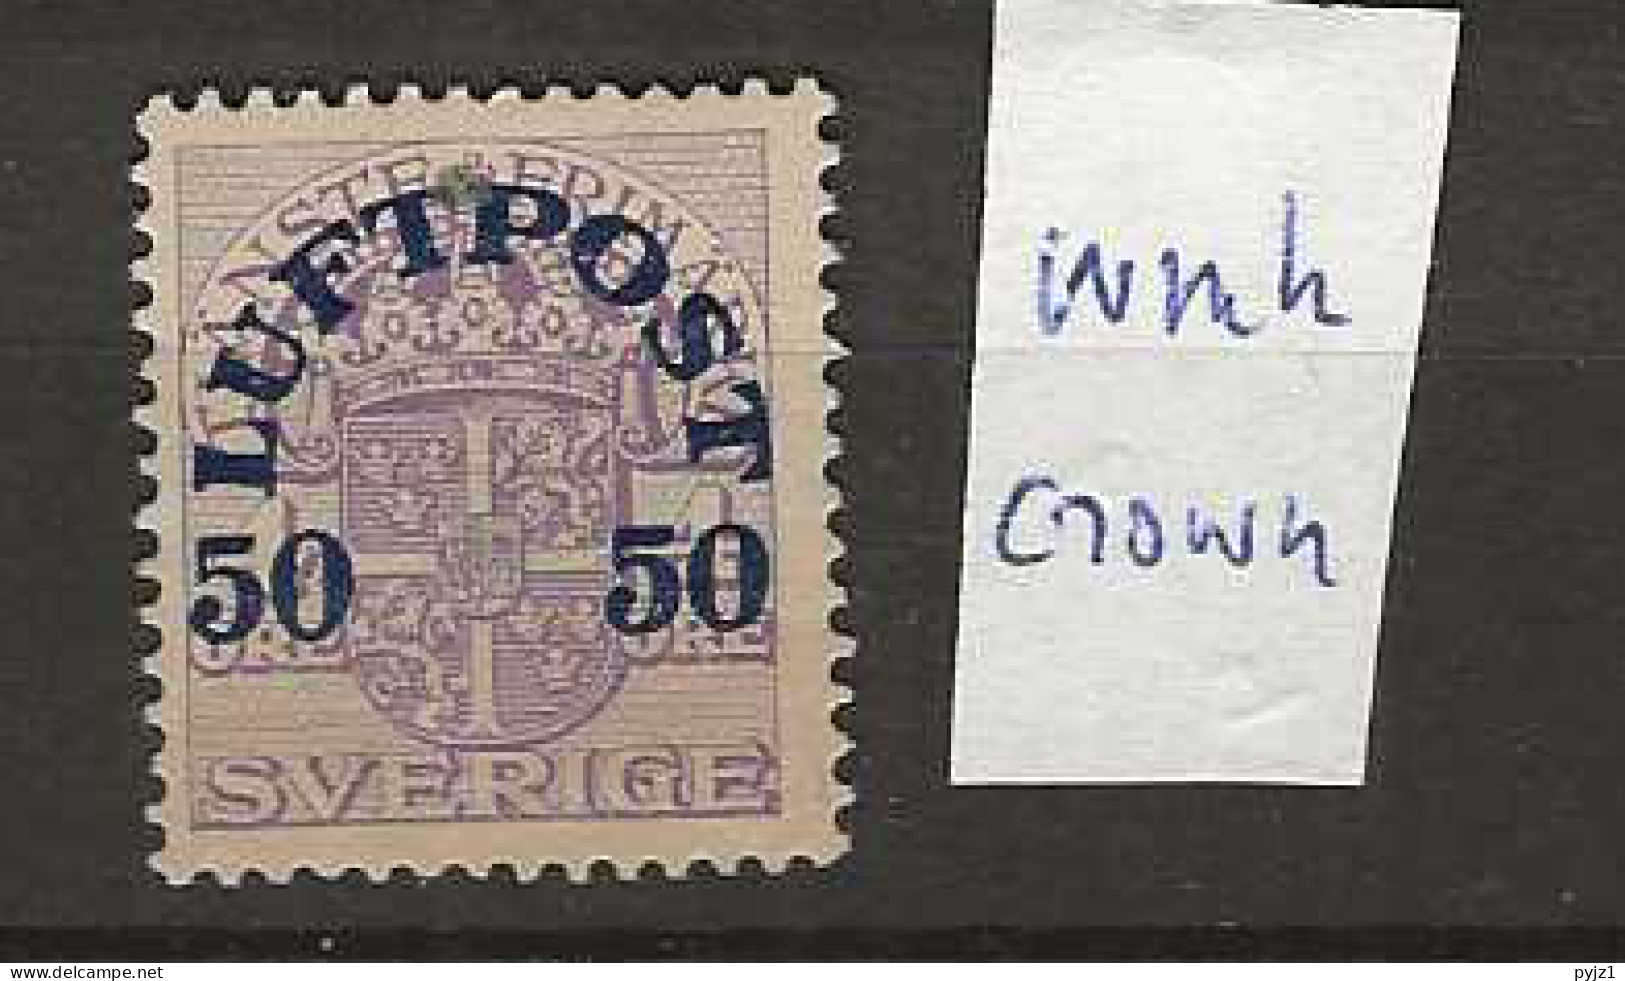 1920 MH Sweden Mi 140V Watermark Crown - Unused Stamps